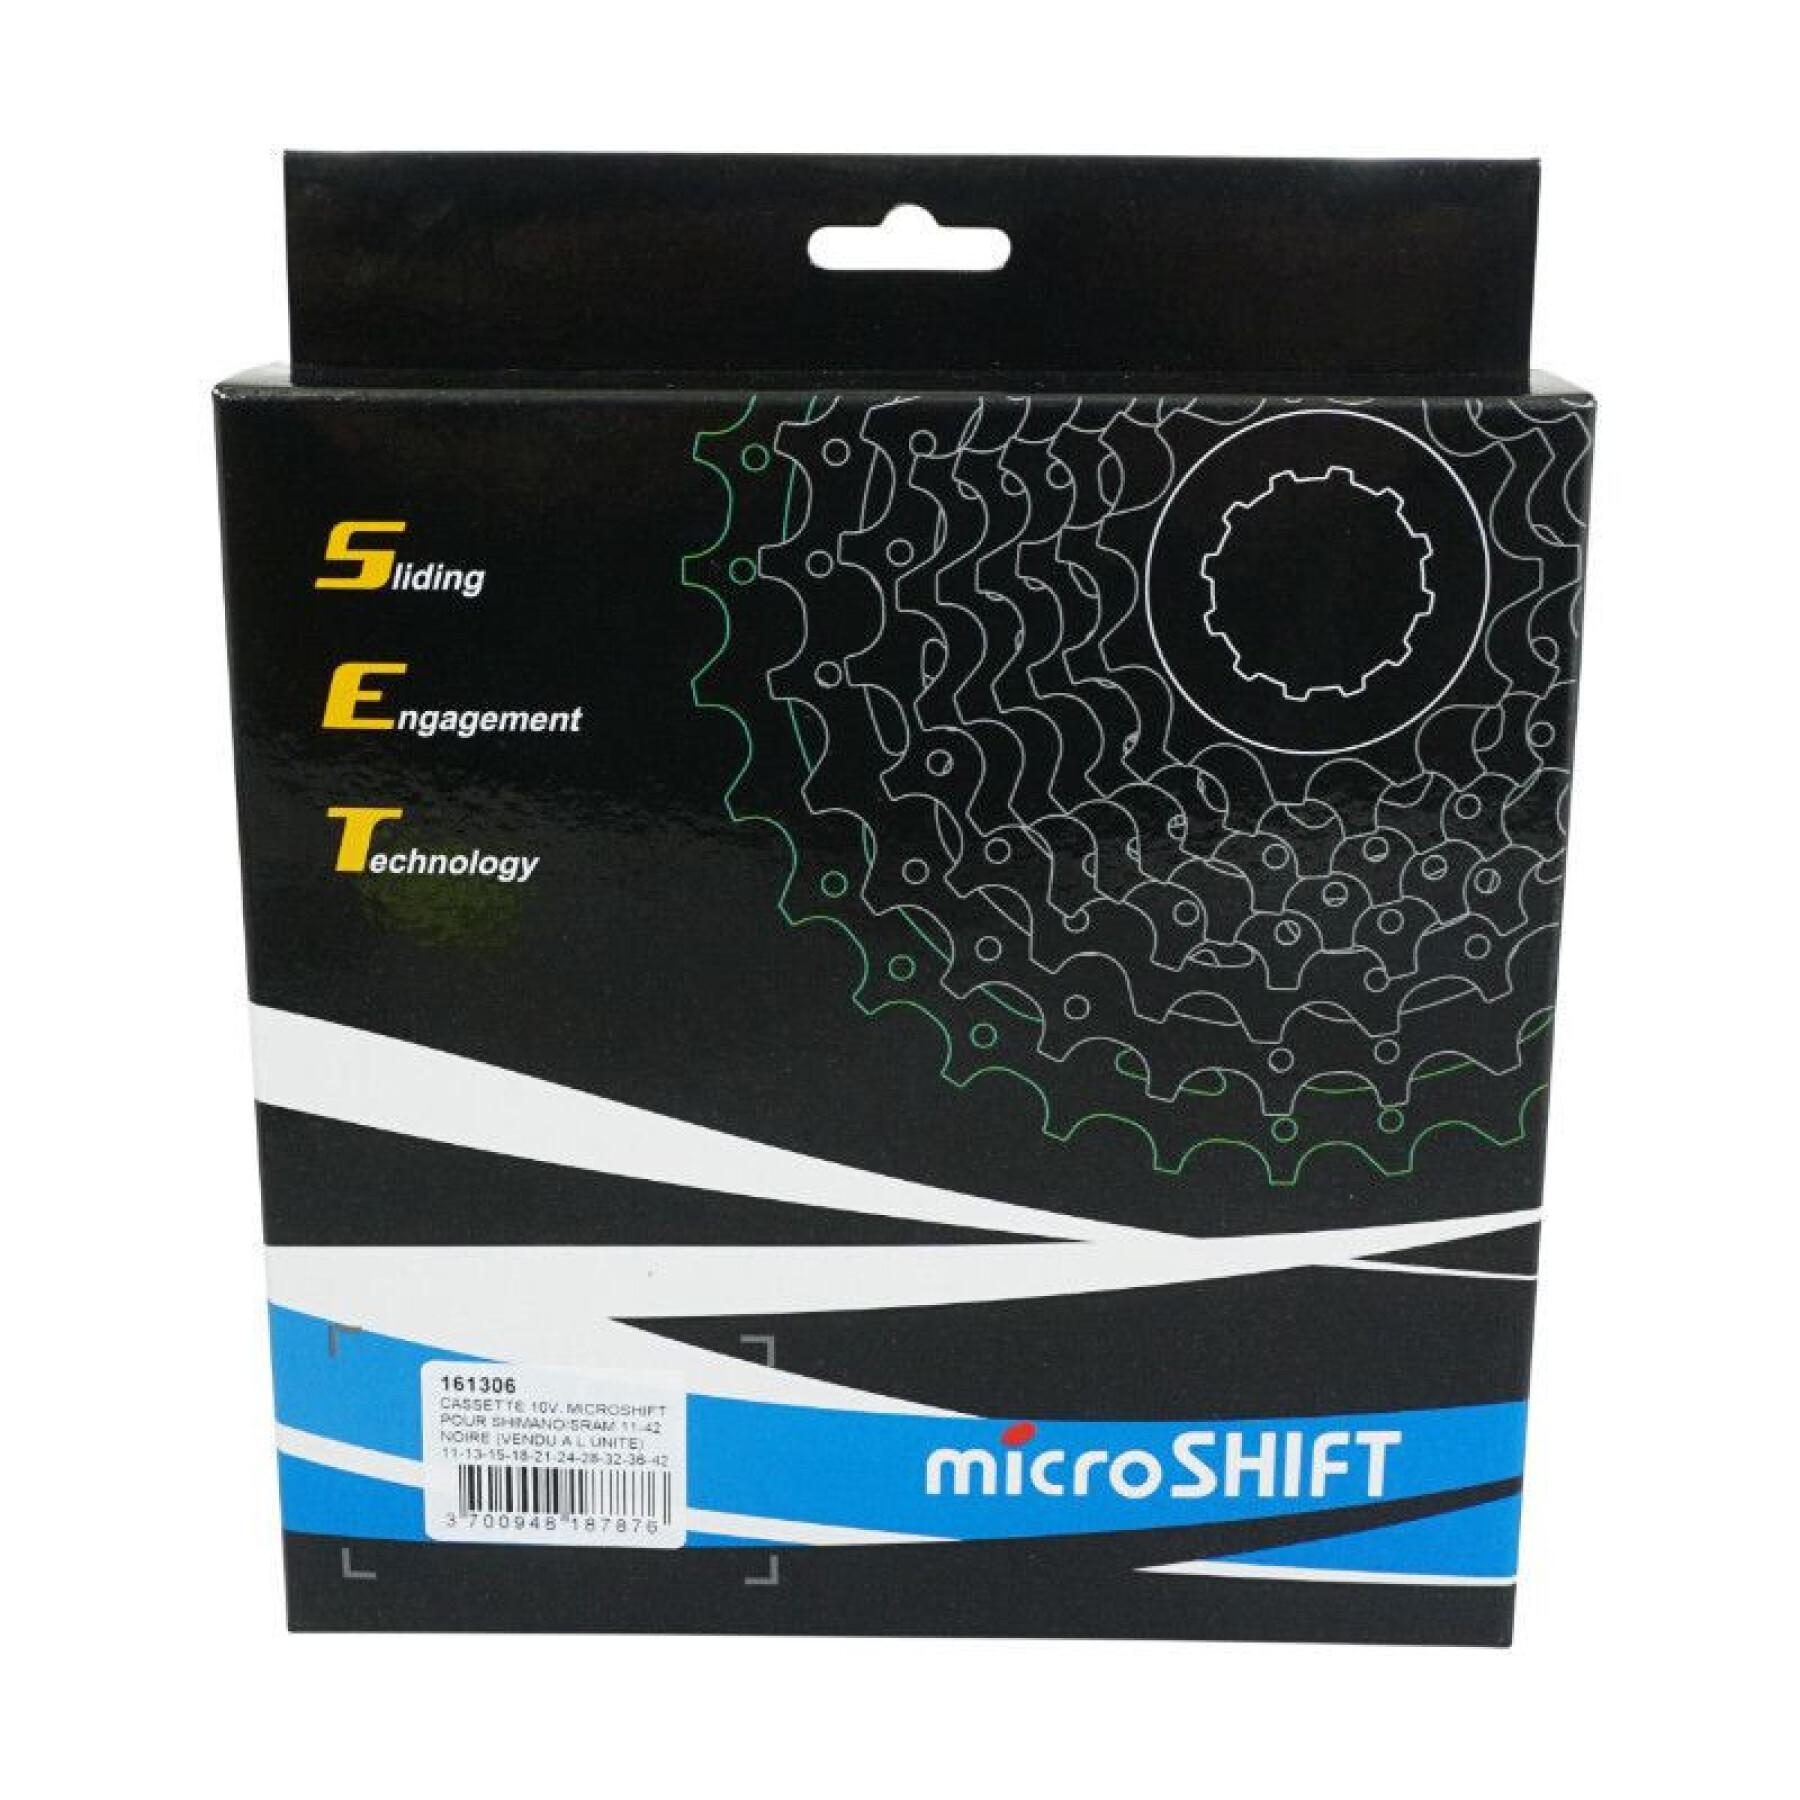 Mountainbike cassette Microshift Shimano-Sram 10 v 11-42 T